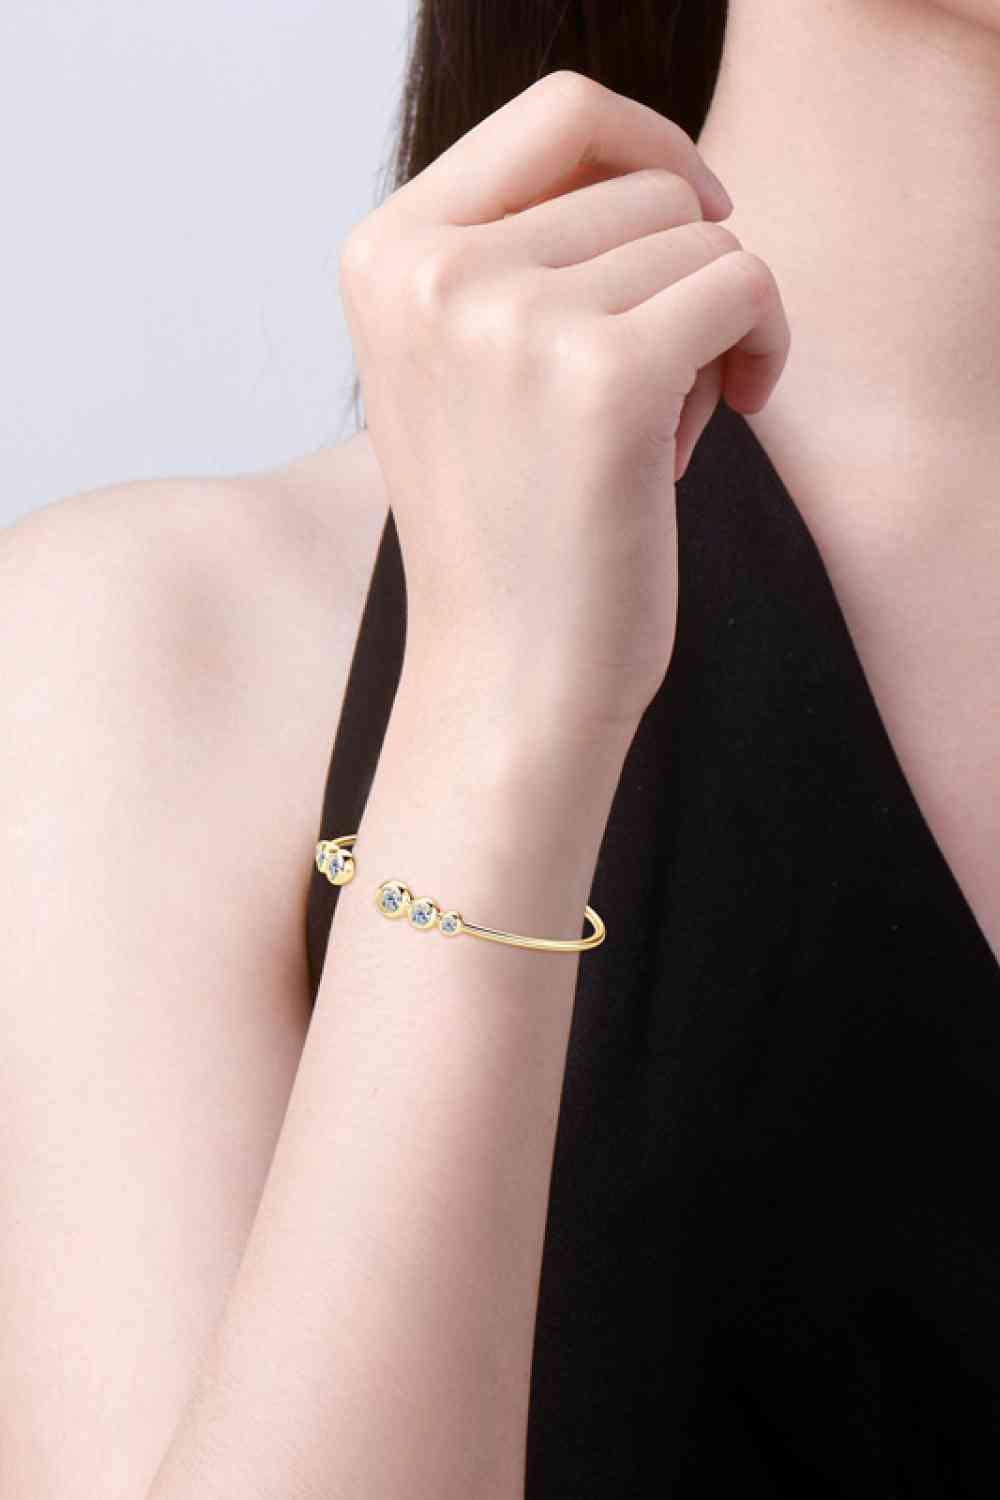 a woman wearing a gold bracelet with a diamond